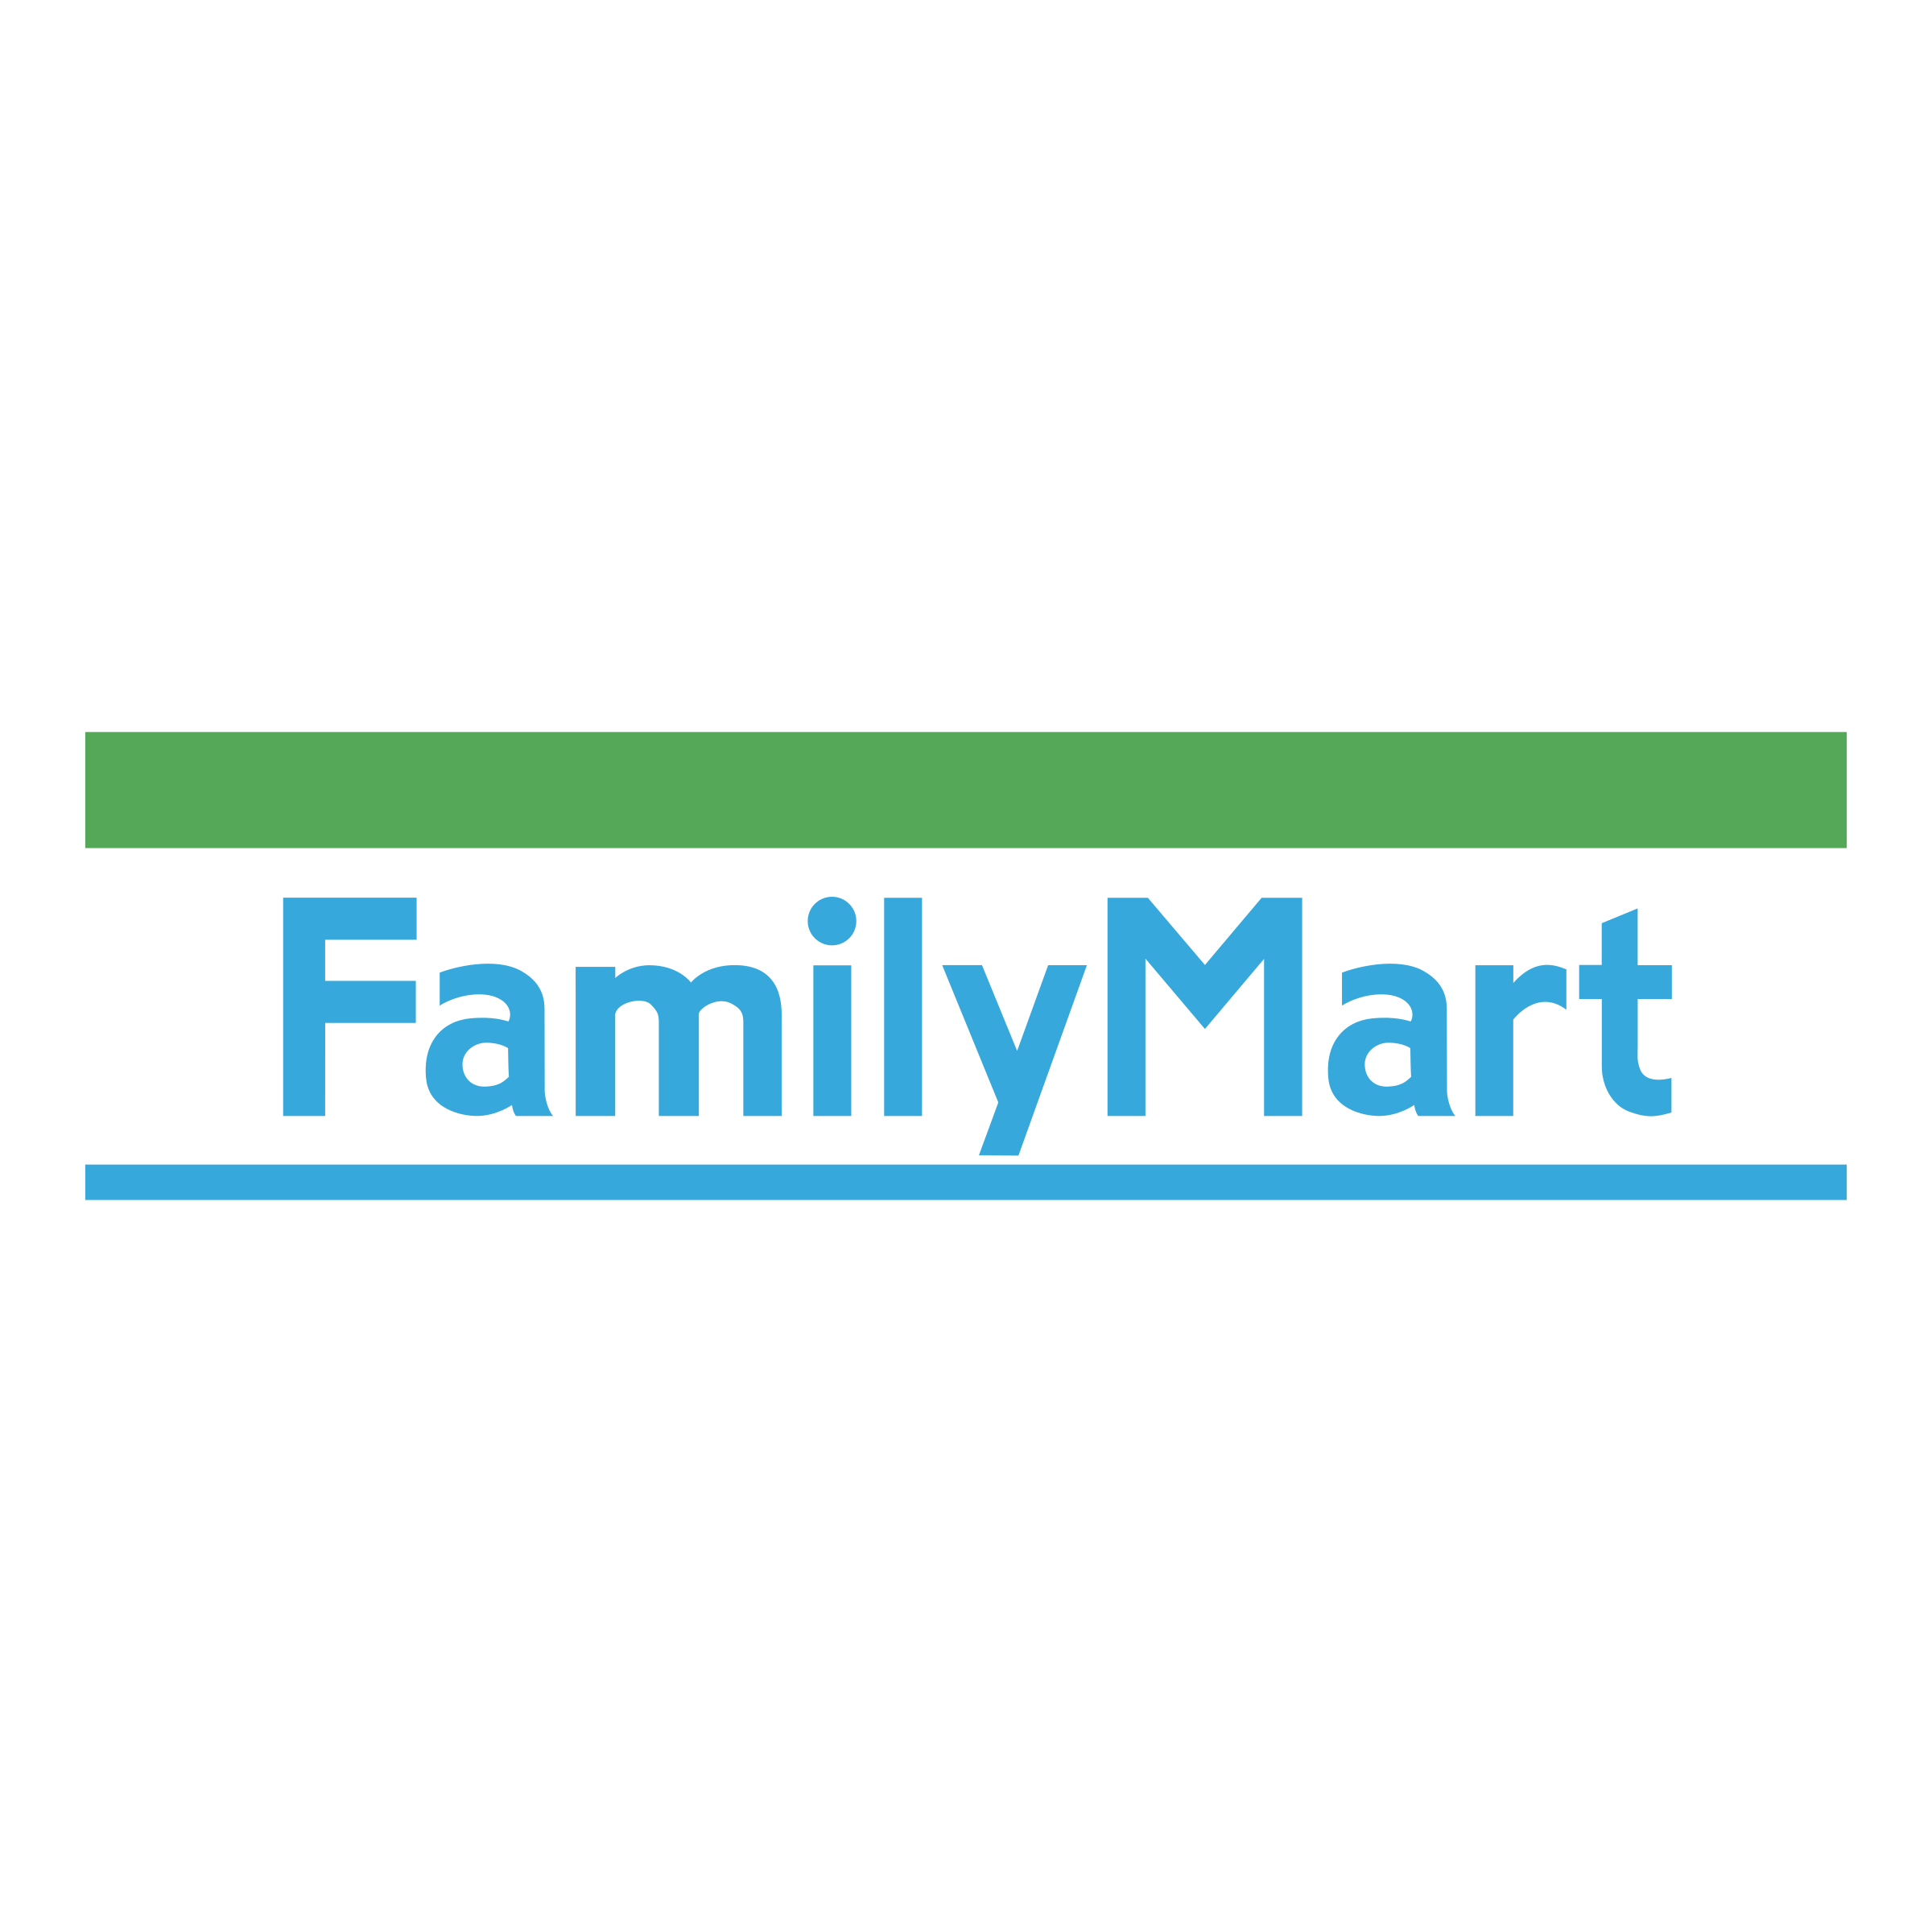 Familymart Logo - FamilyMart Logo PNG Transparent & SVG Vector - Freebie Supply